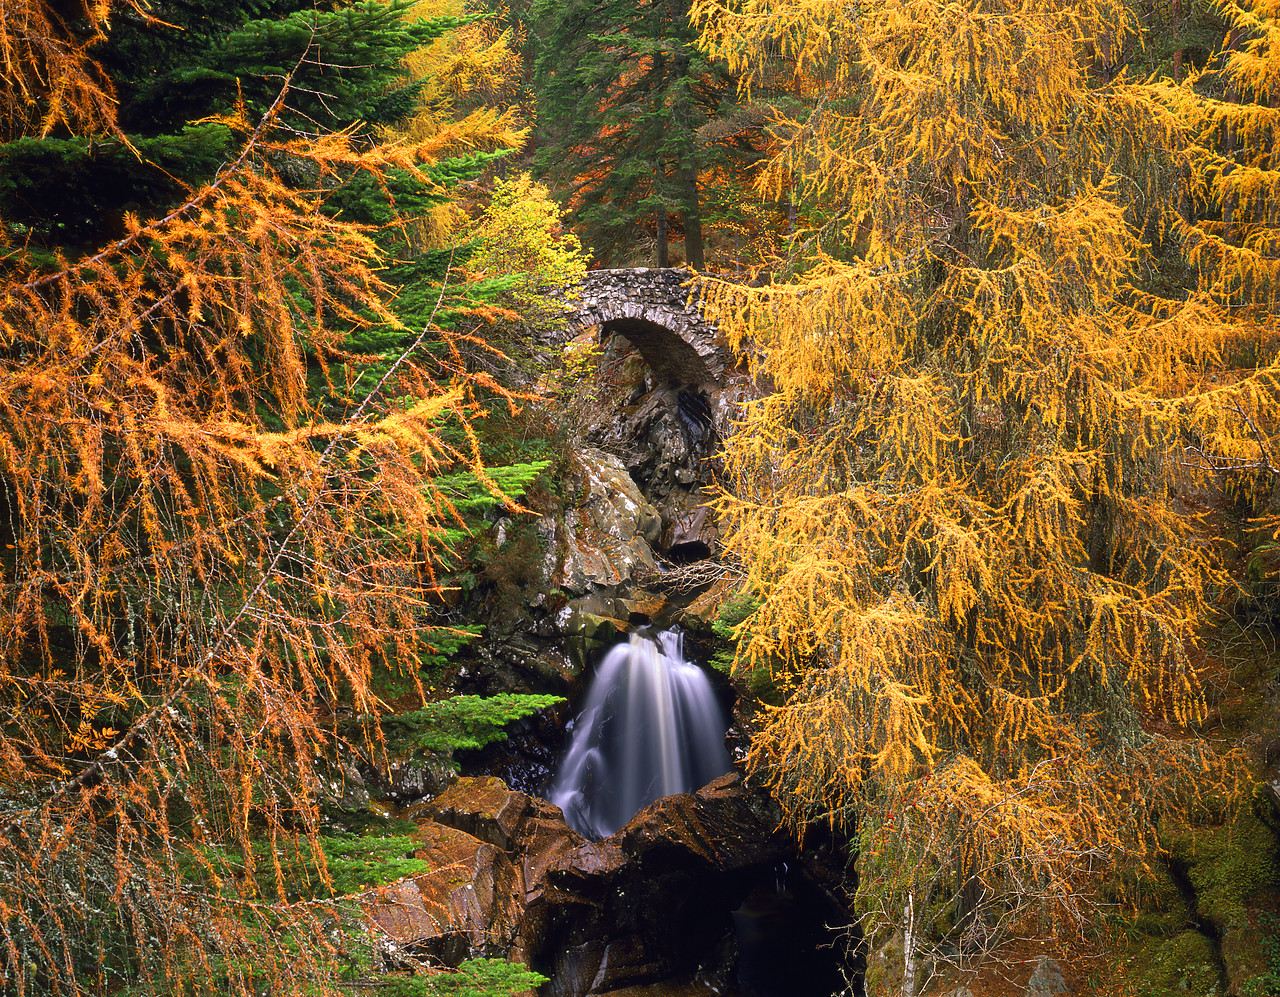 #060725-3 - Falls of Bruar in Autumn, Tayside Region, Scotland